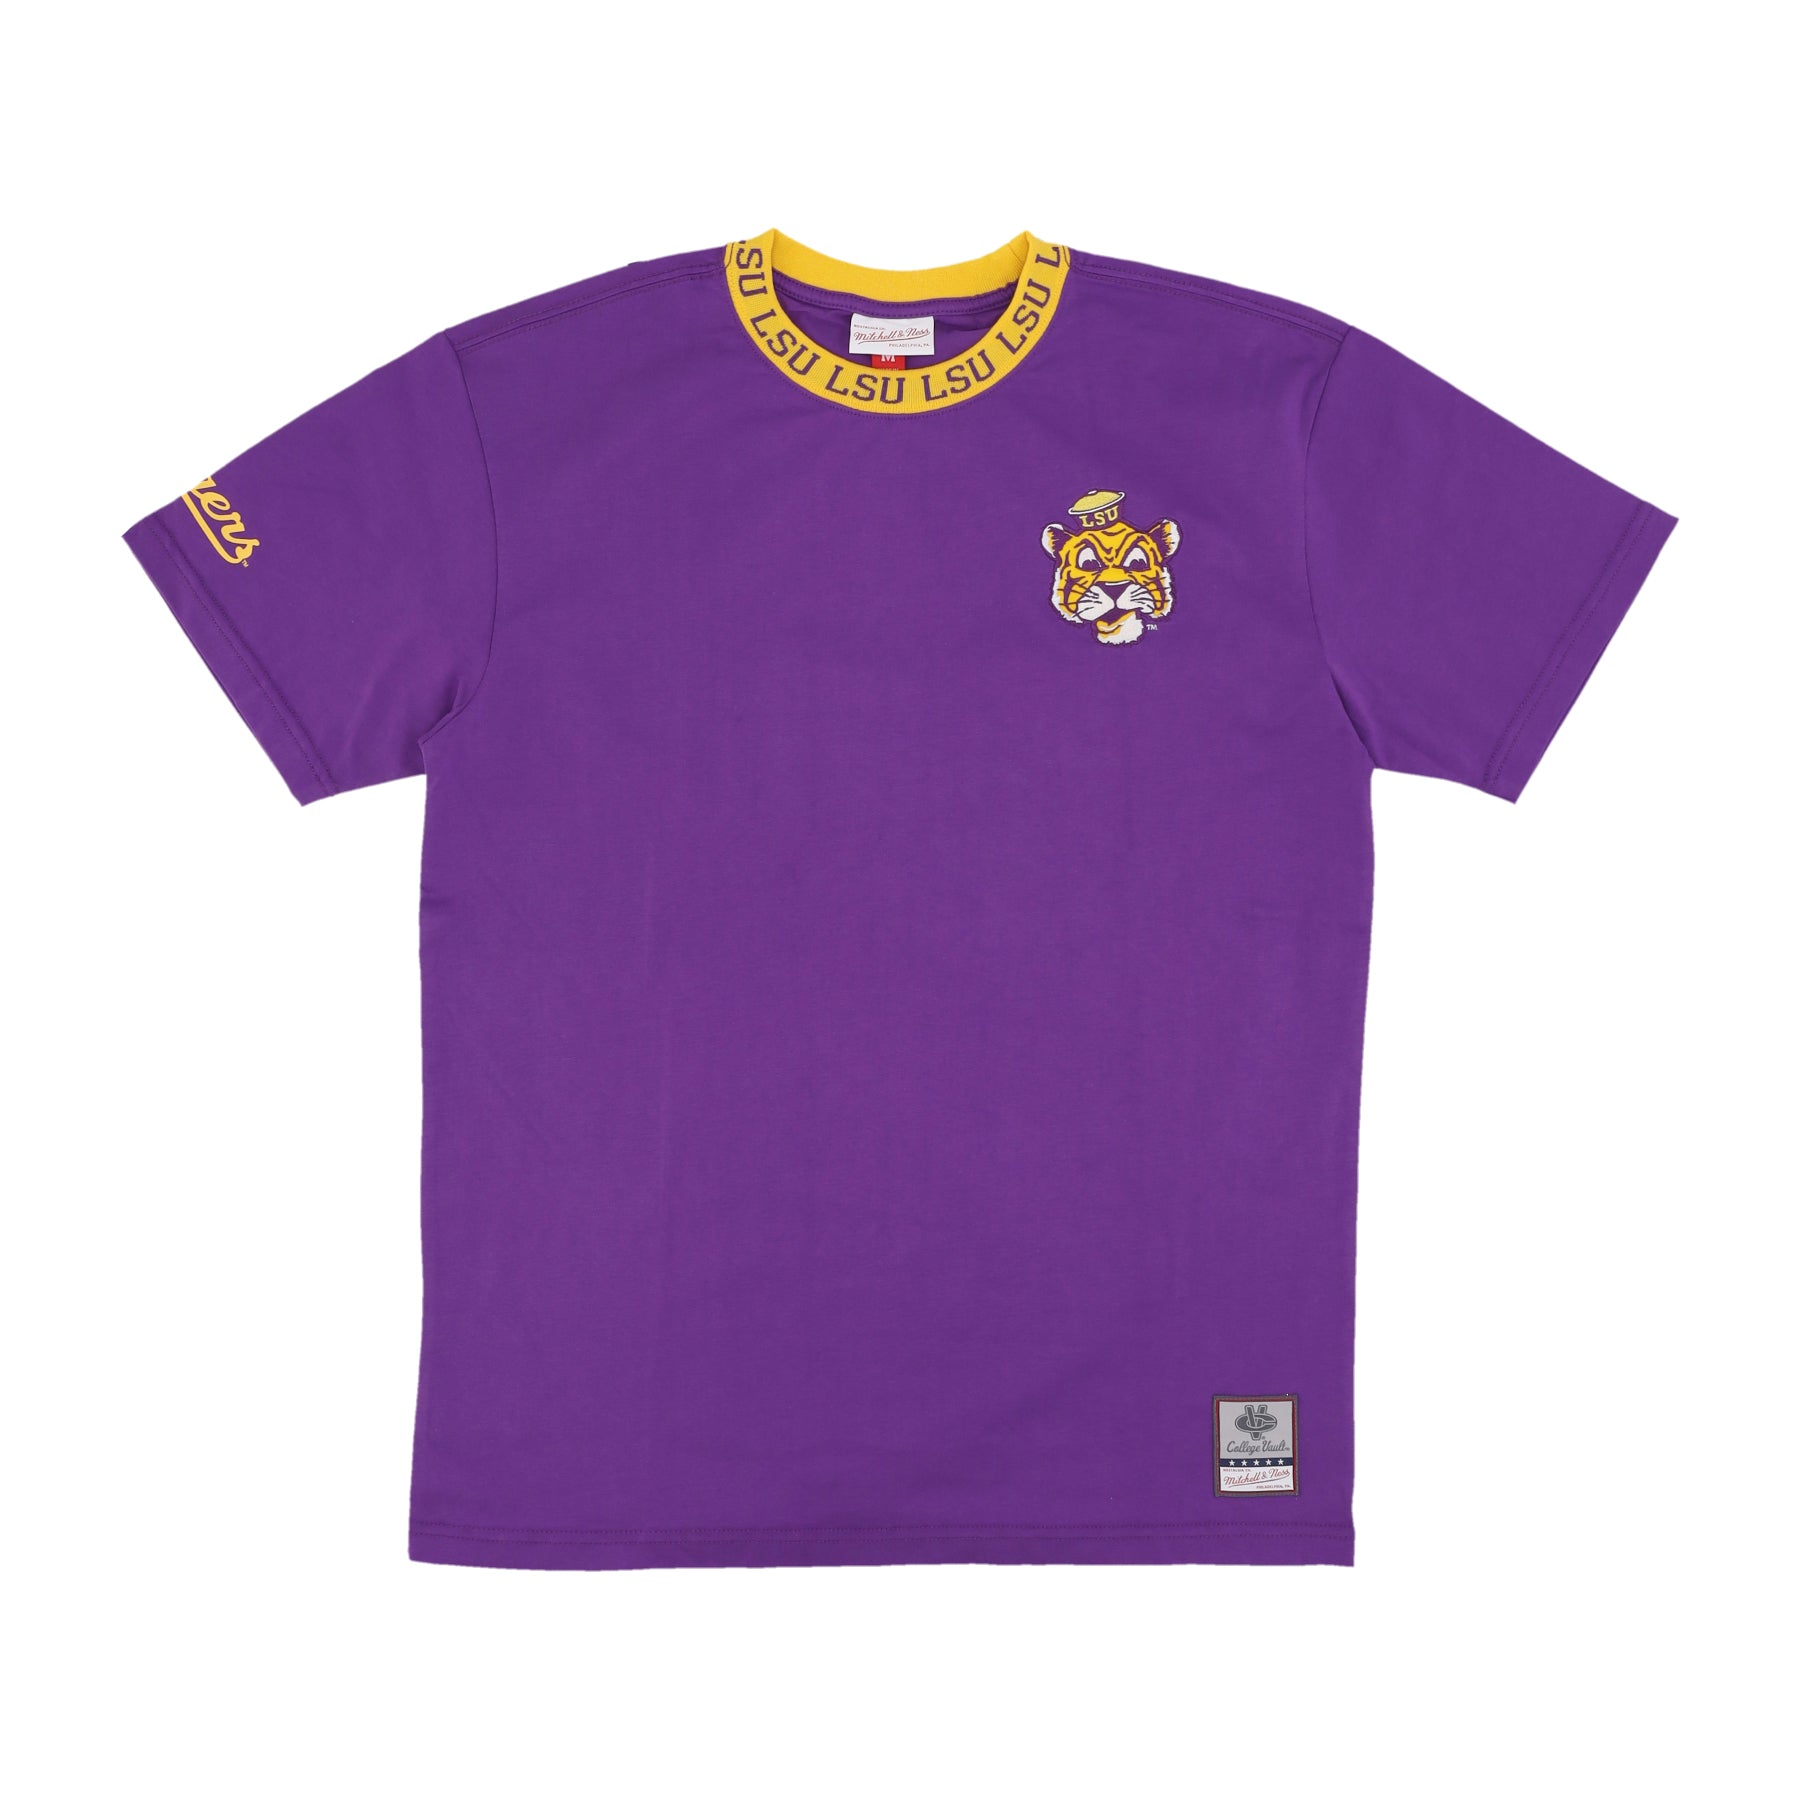 Maglietta Uomo Ncaa Jacquard Ringer Logo Tee Loutig Purple TCRW6601-LSUYYPPPPURP